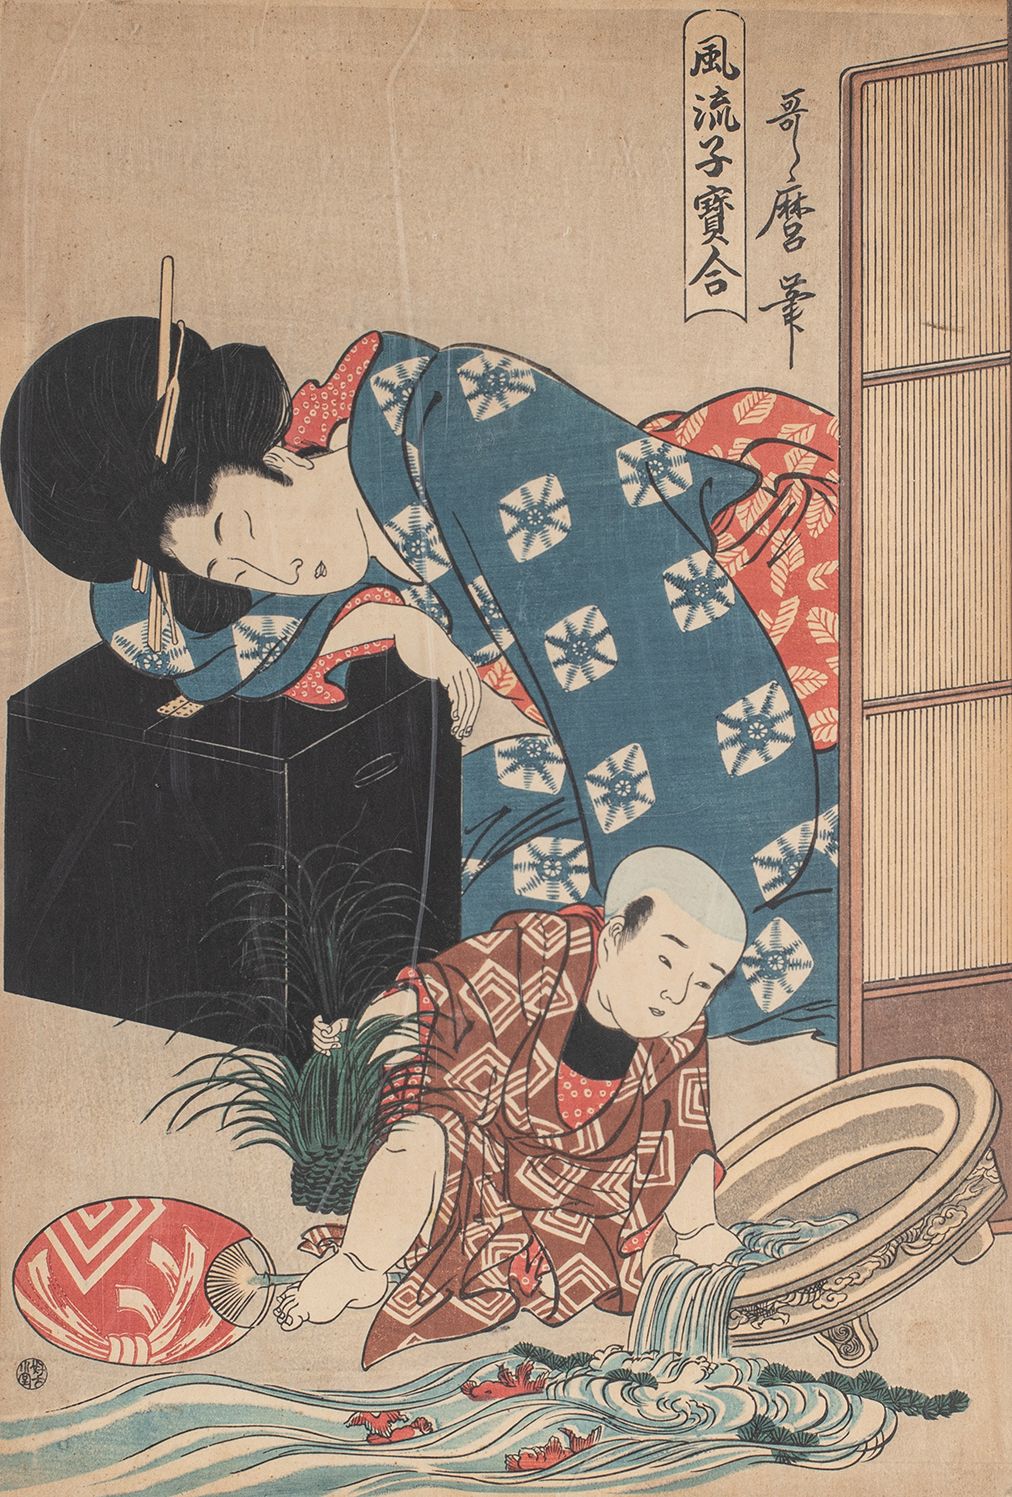 Null 
Estampe de Utamaro.

Copie XXe siècle

Format oban.